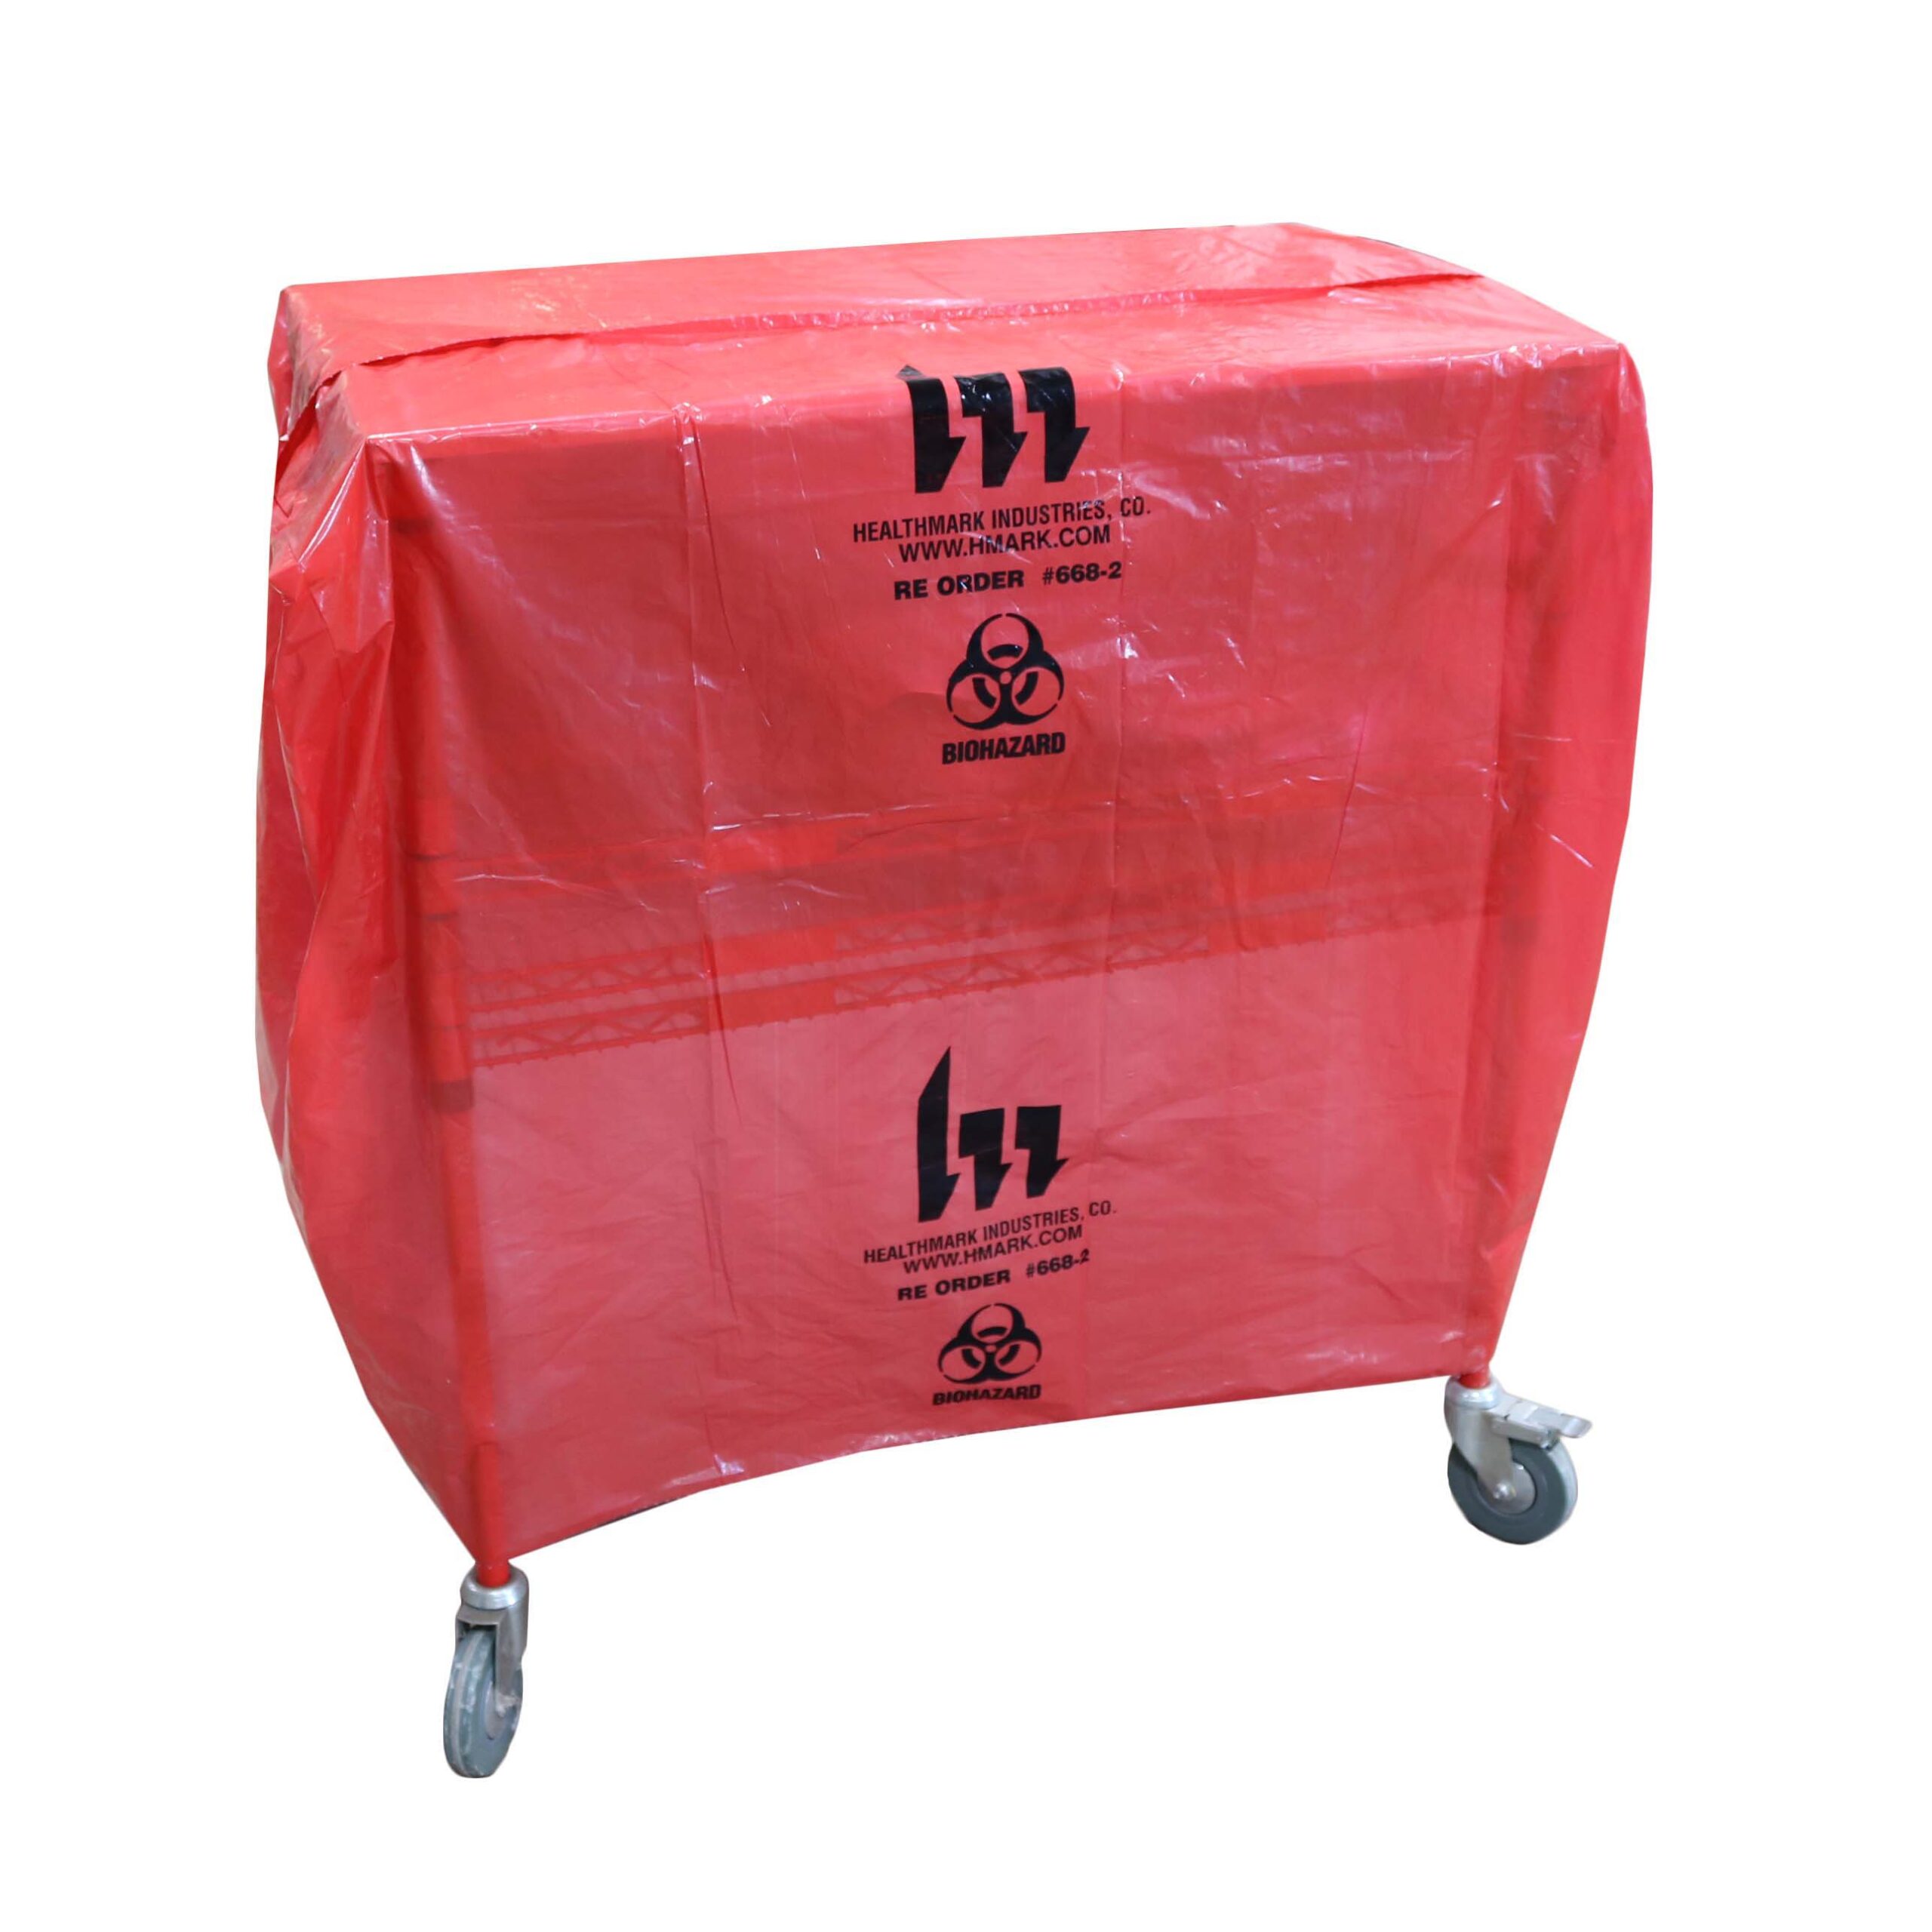 Storage Products - TEARGUARD Plastic Shelfliner - Healthmark Industries